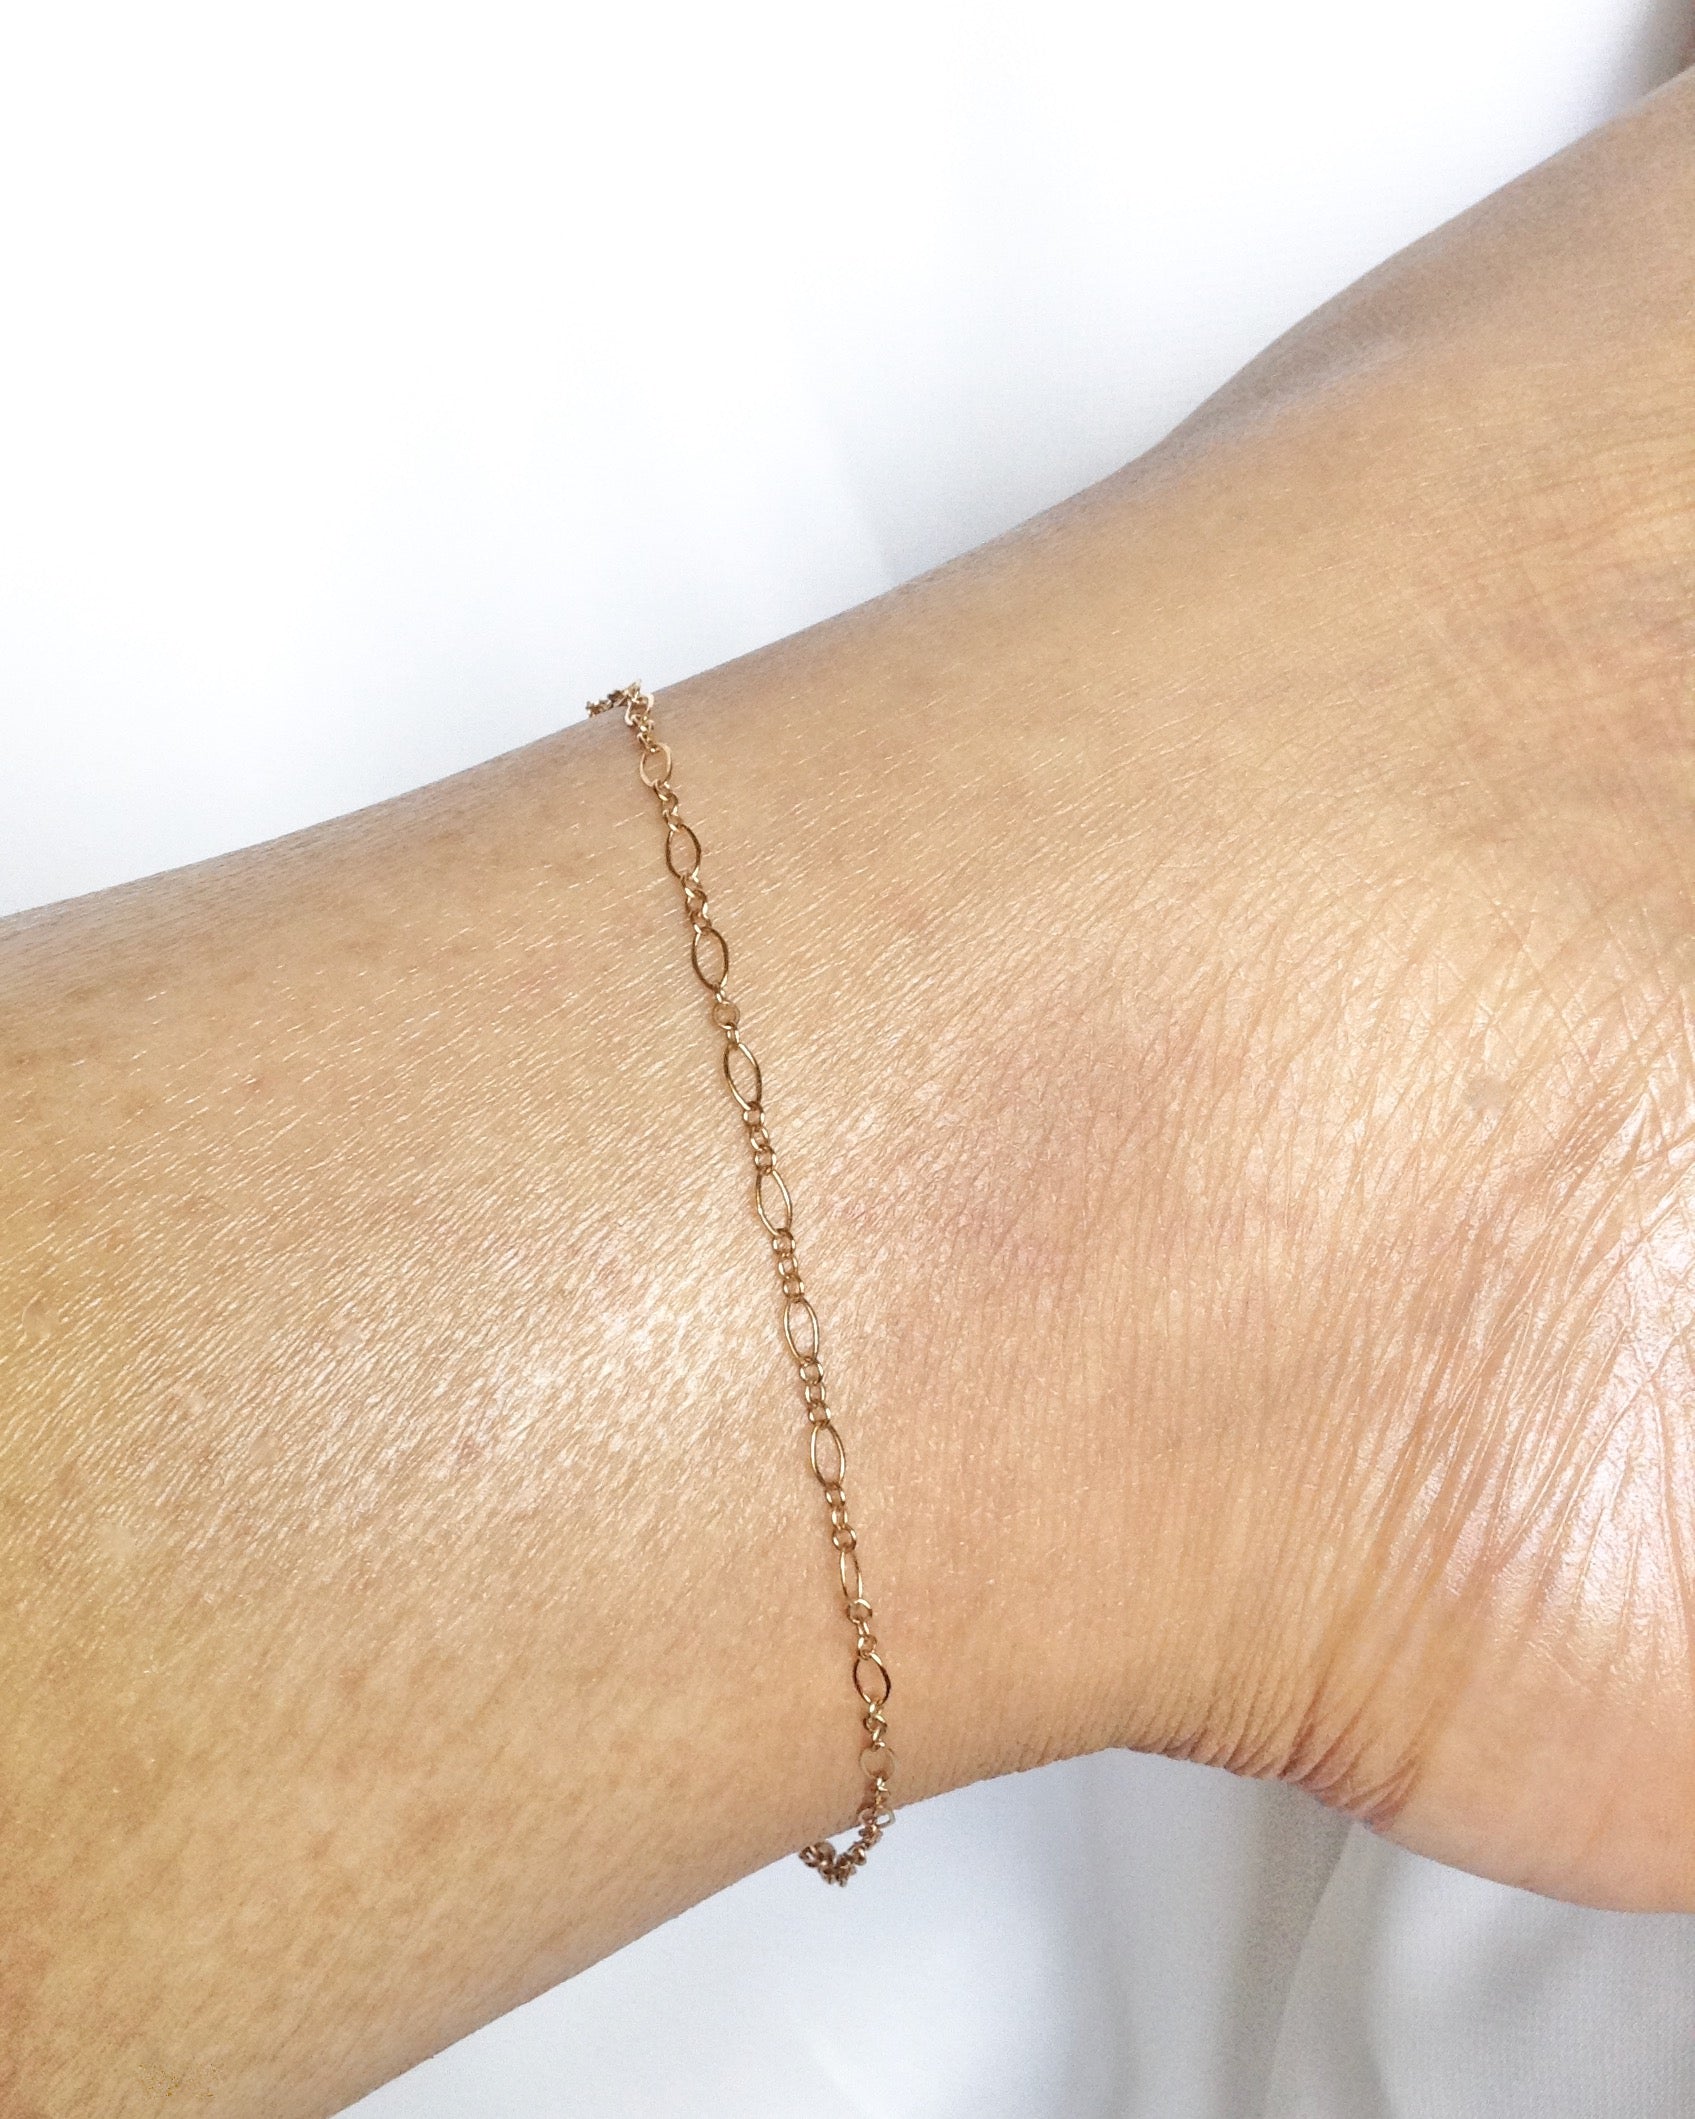 Gold Elegant Anklet | Dainty Gold Anklet | Minimalist Ankle Bracelet | IB Jewelry